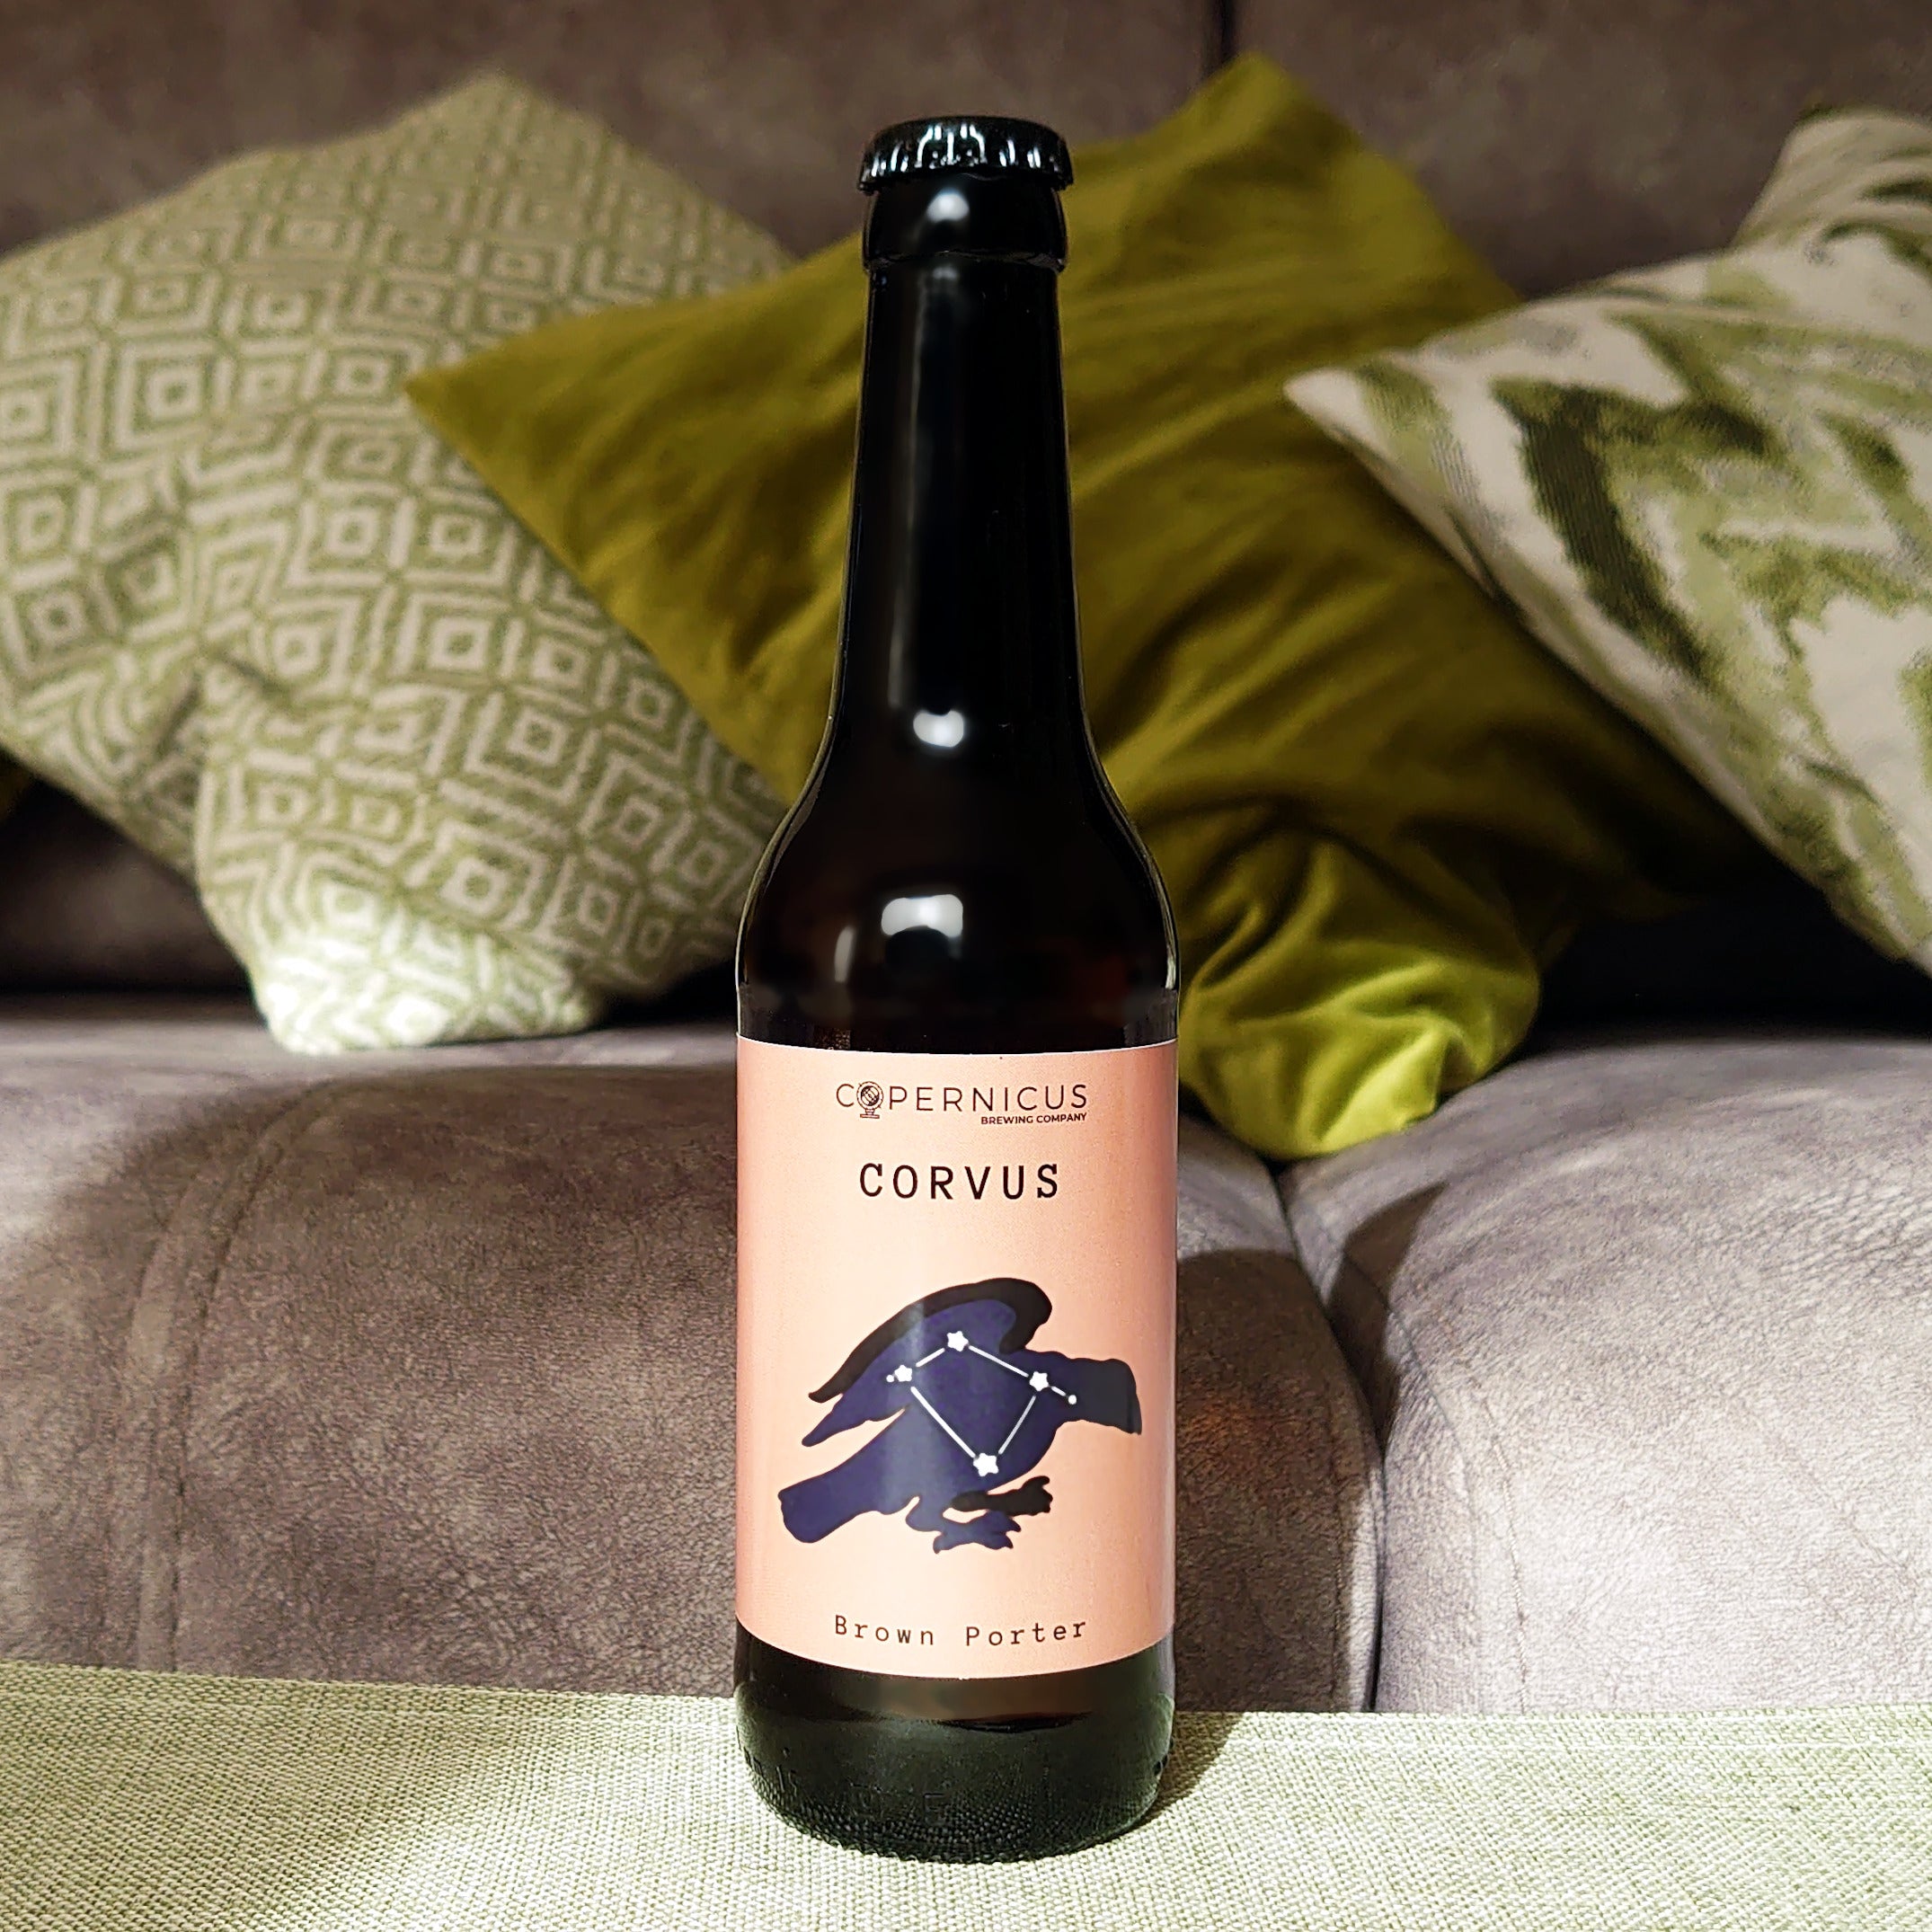 Botella de 33cl de cerveza Copernicus Corvus - Brown Porter